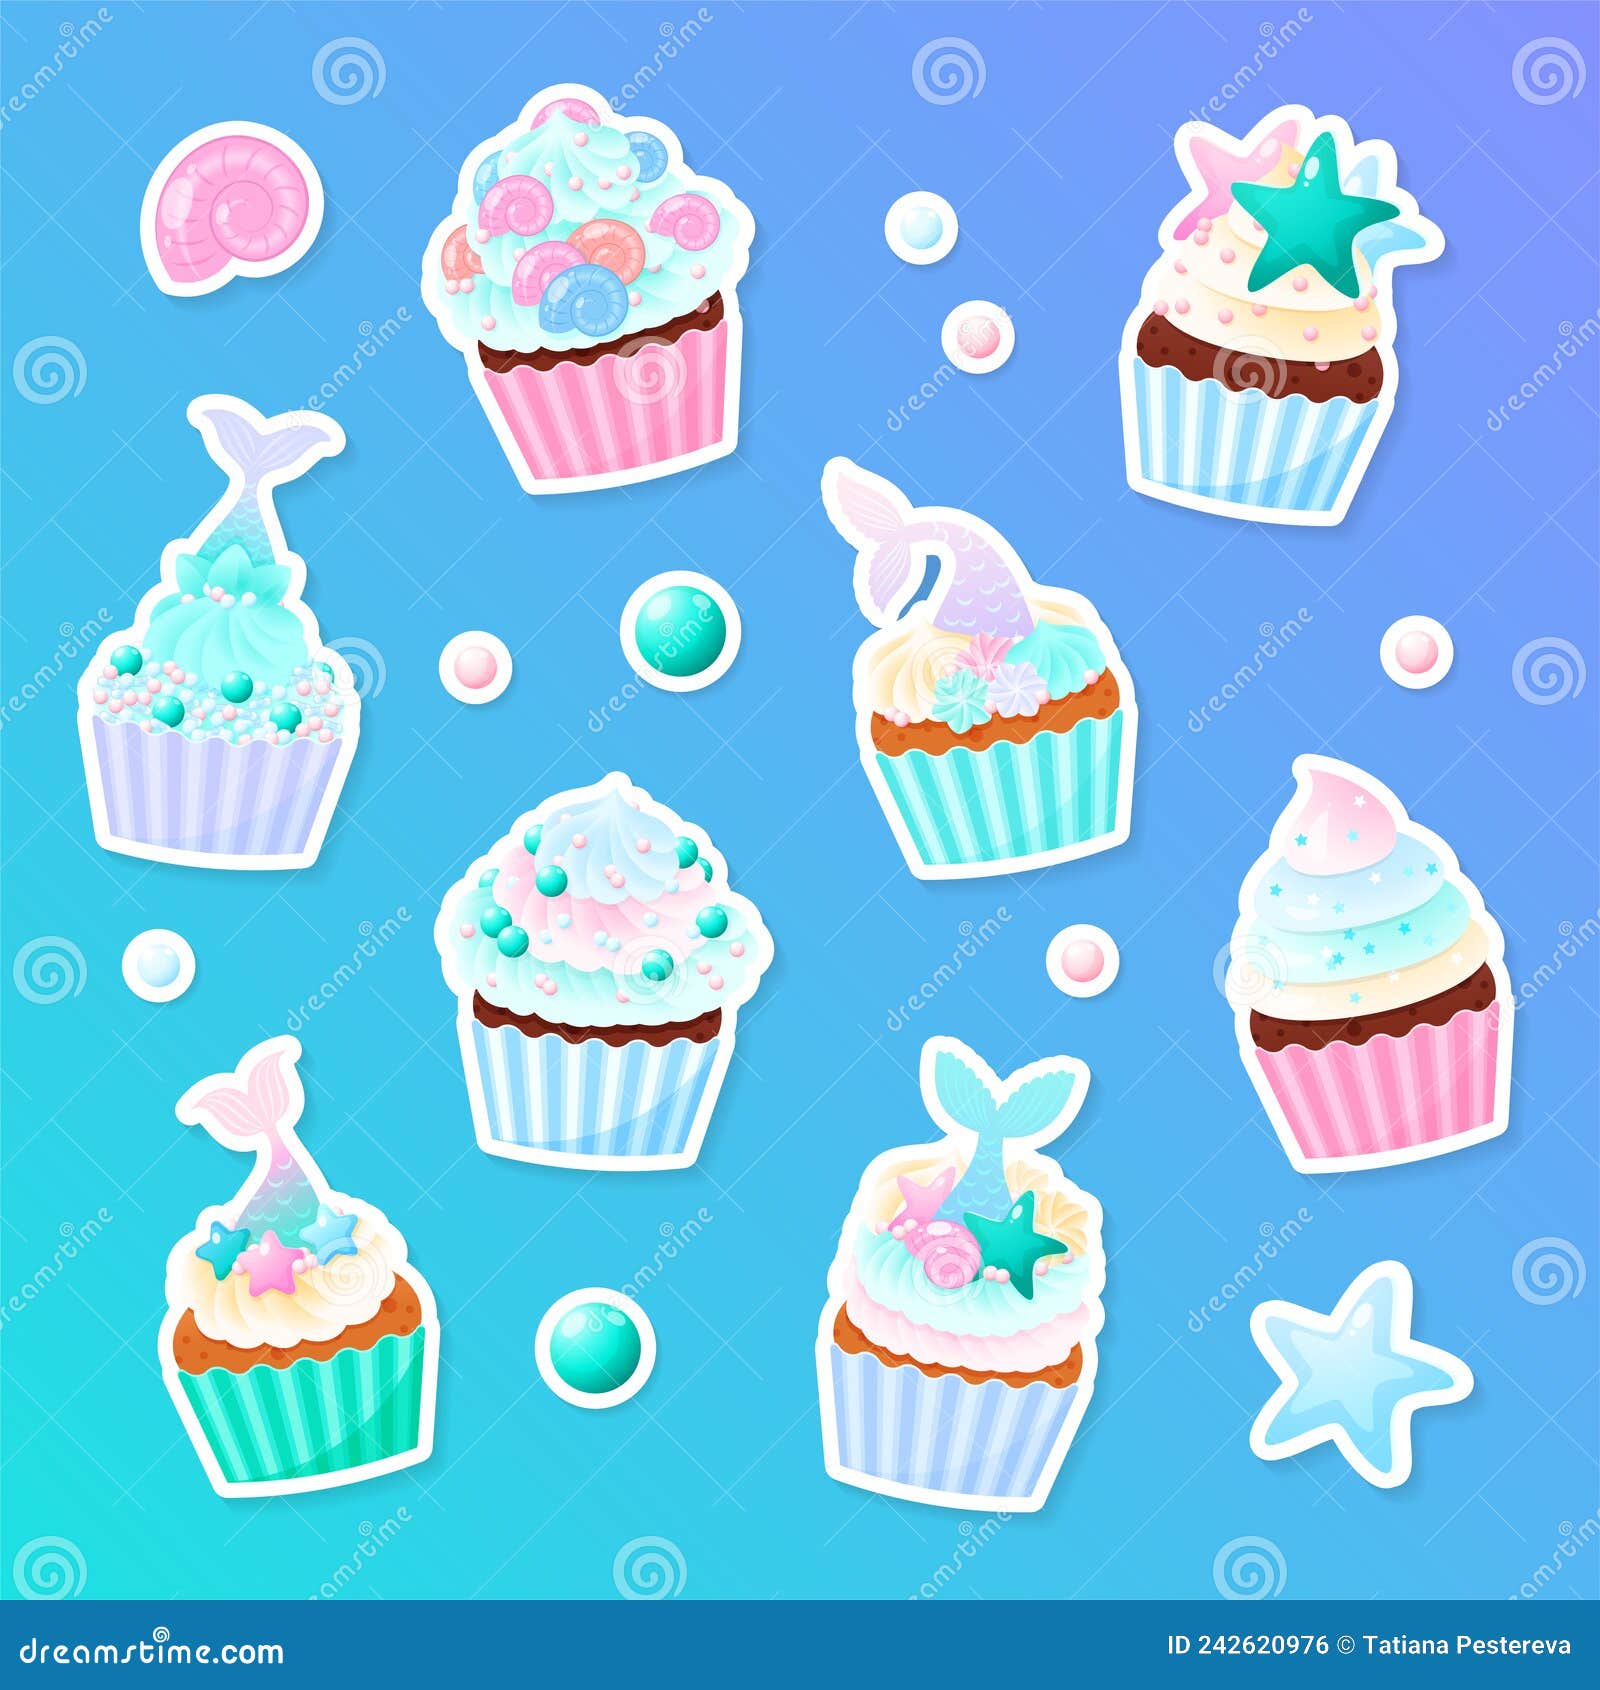 cupcake stickers, Stock vector